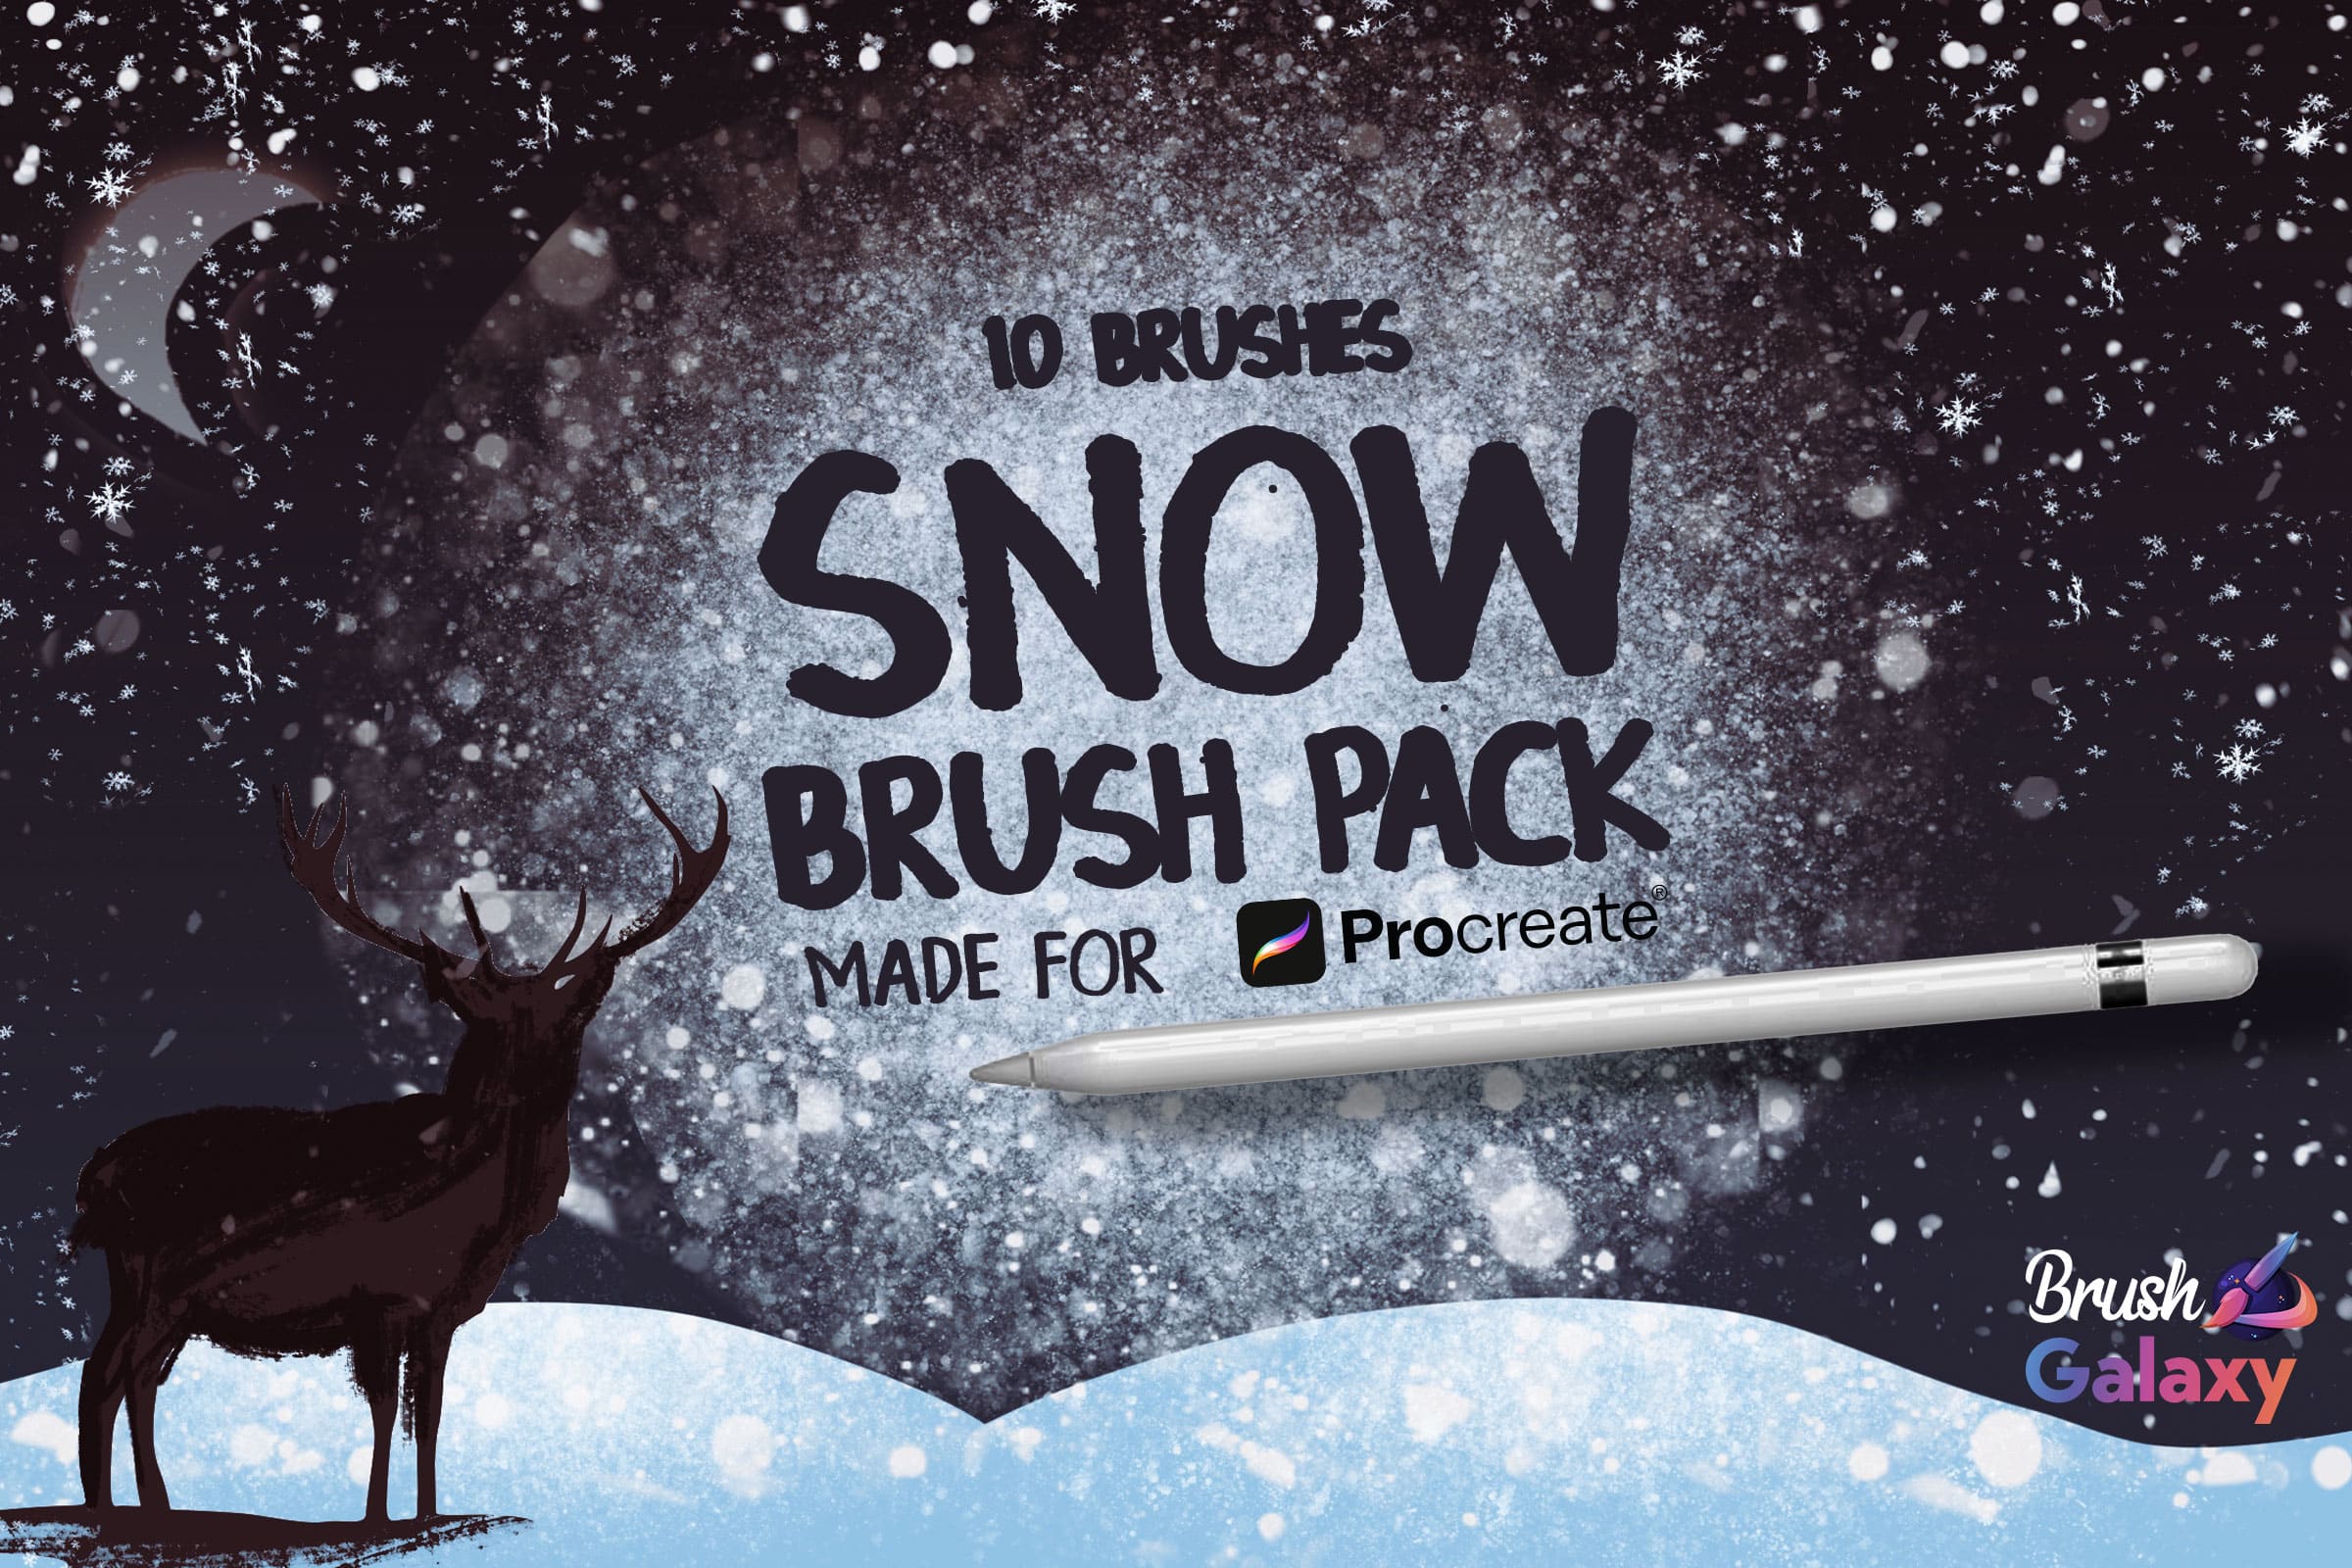 Snow Brush Pack